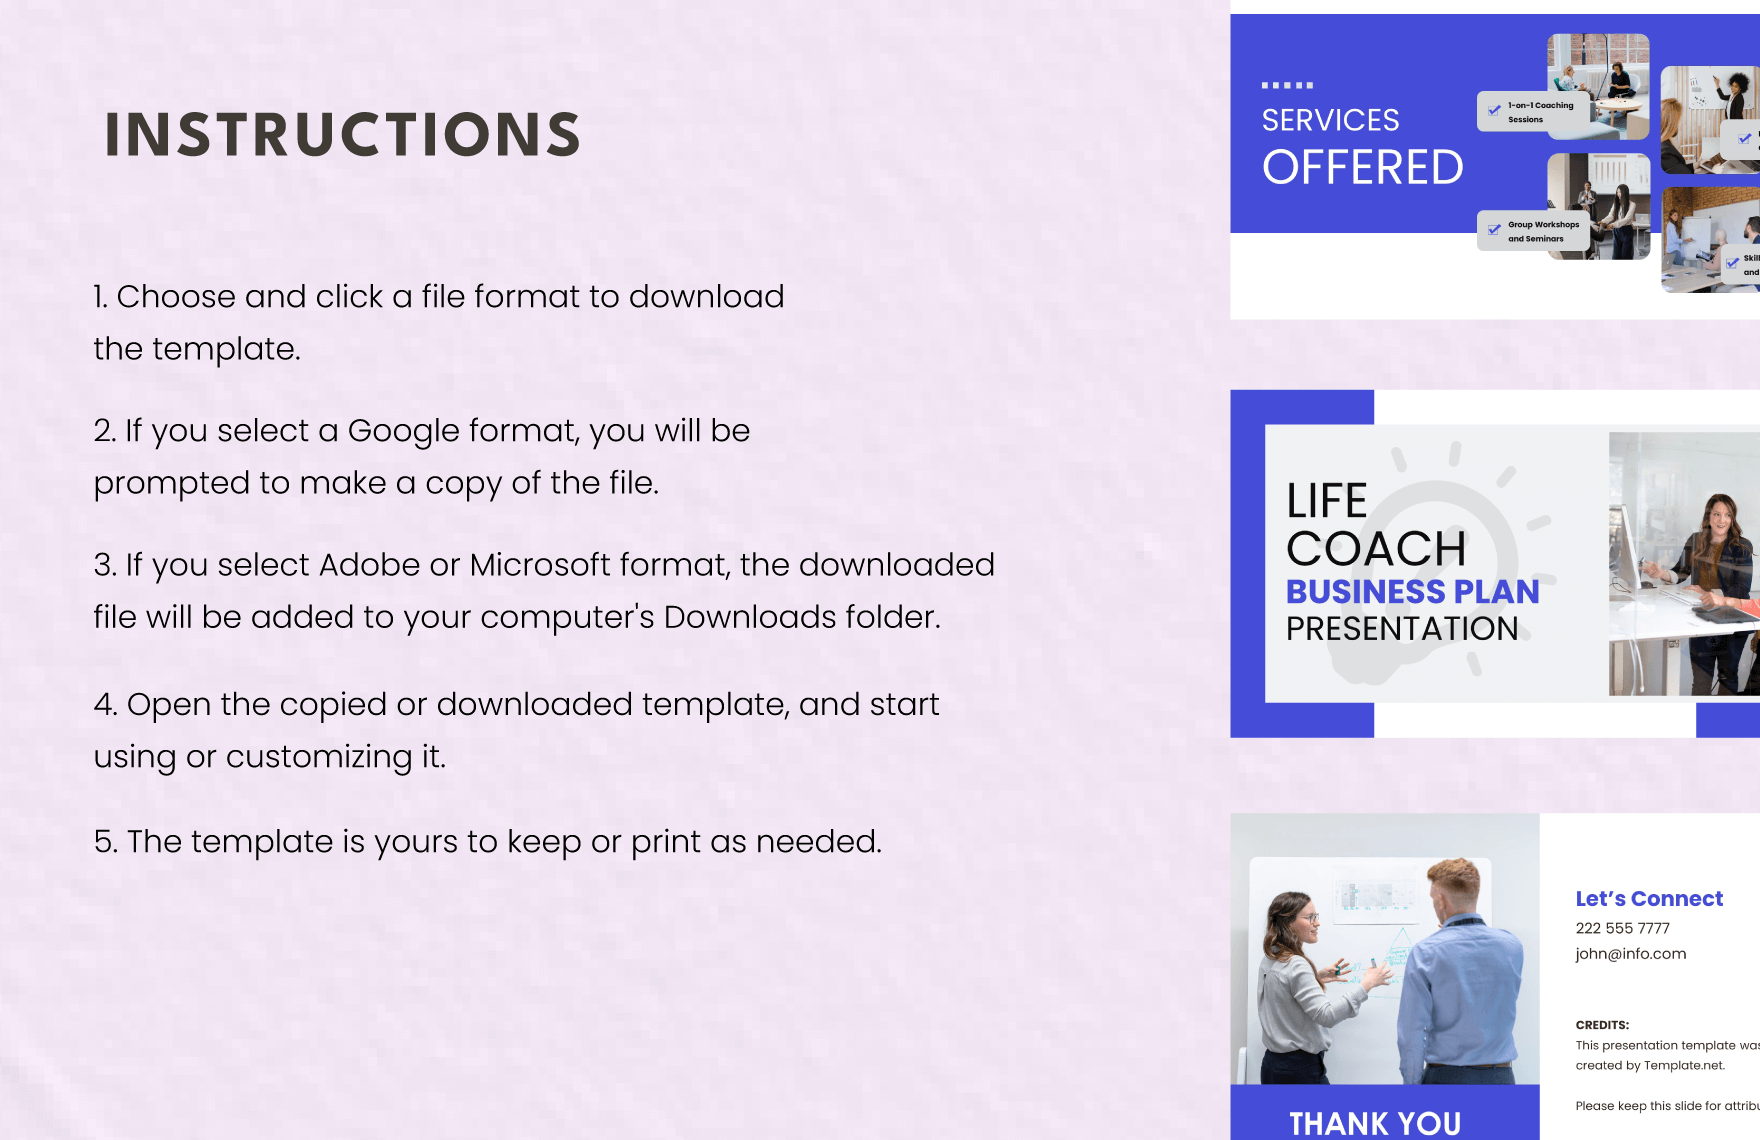 Life Coach Business Plan Presentation Template